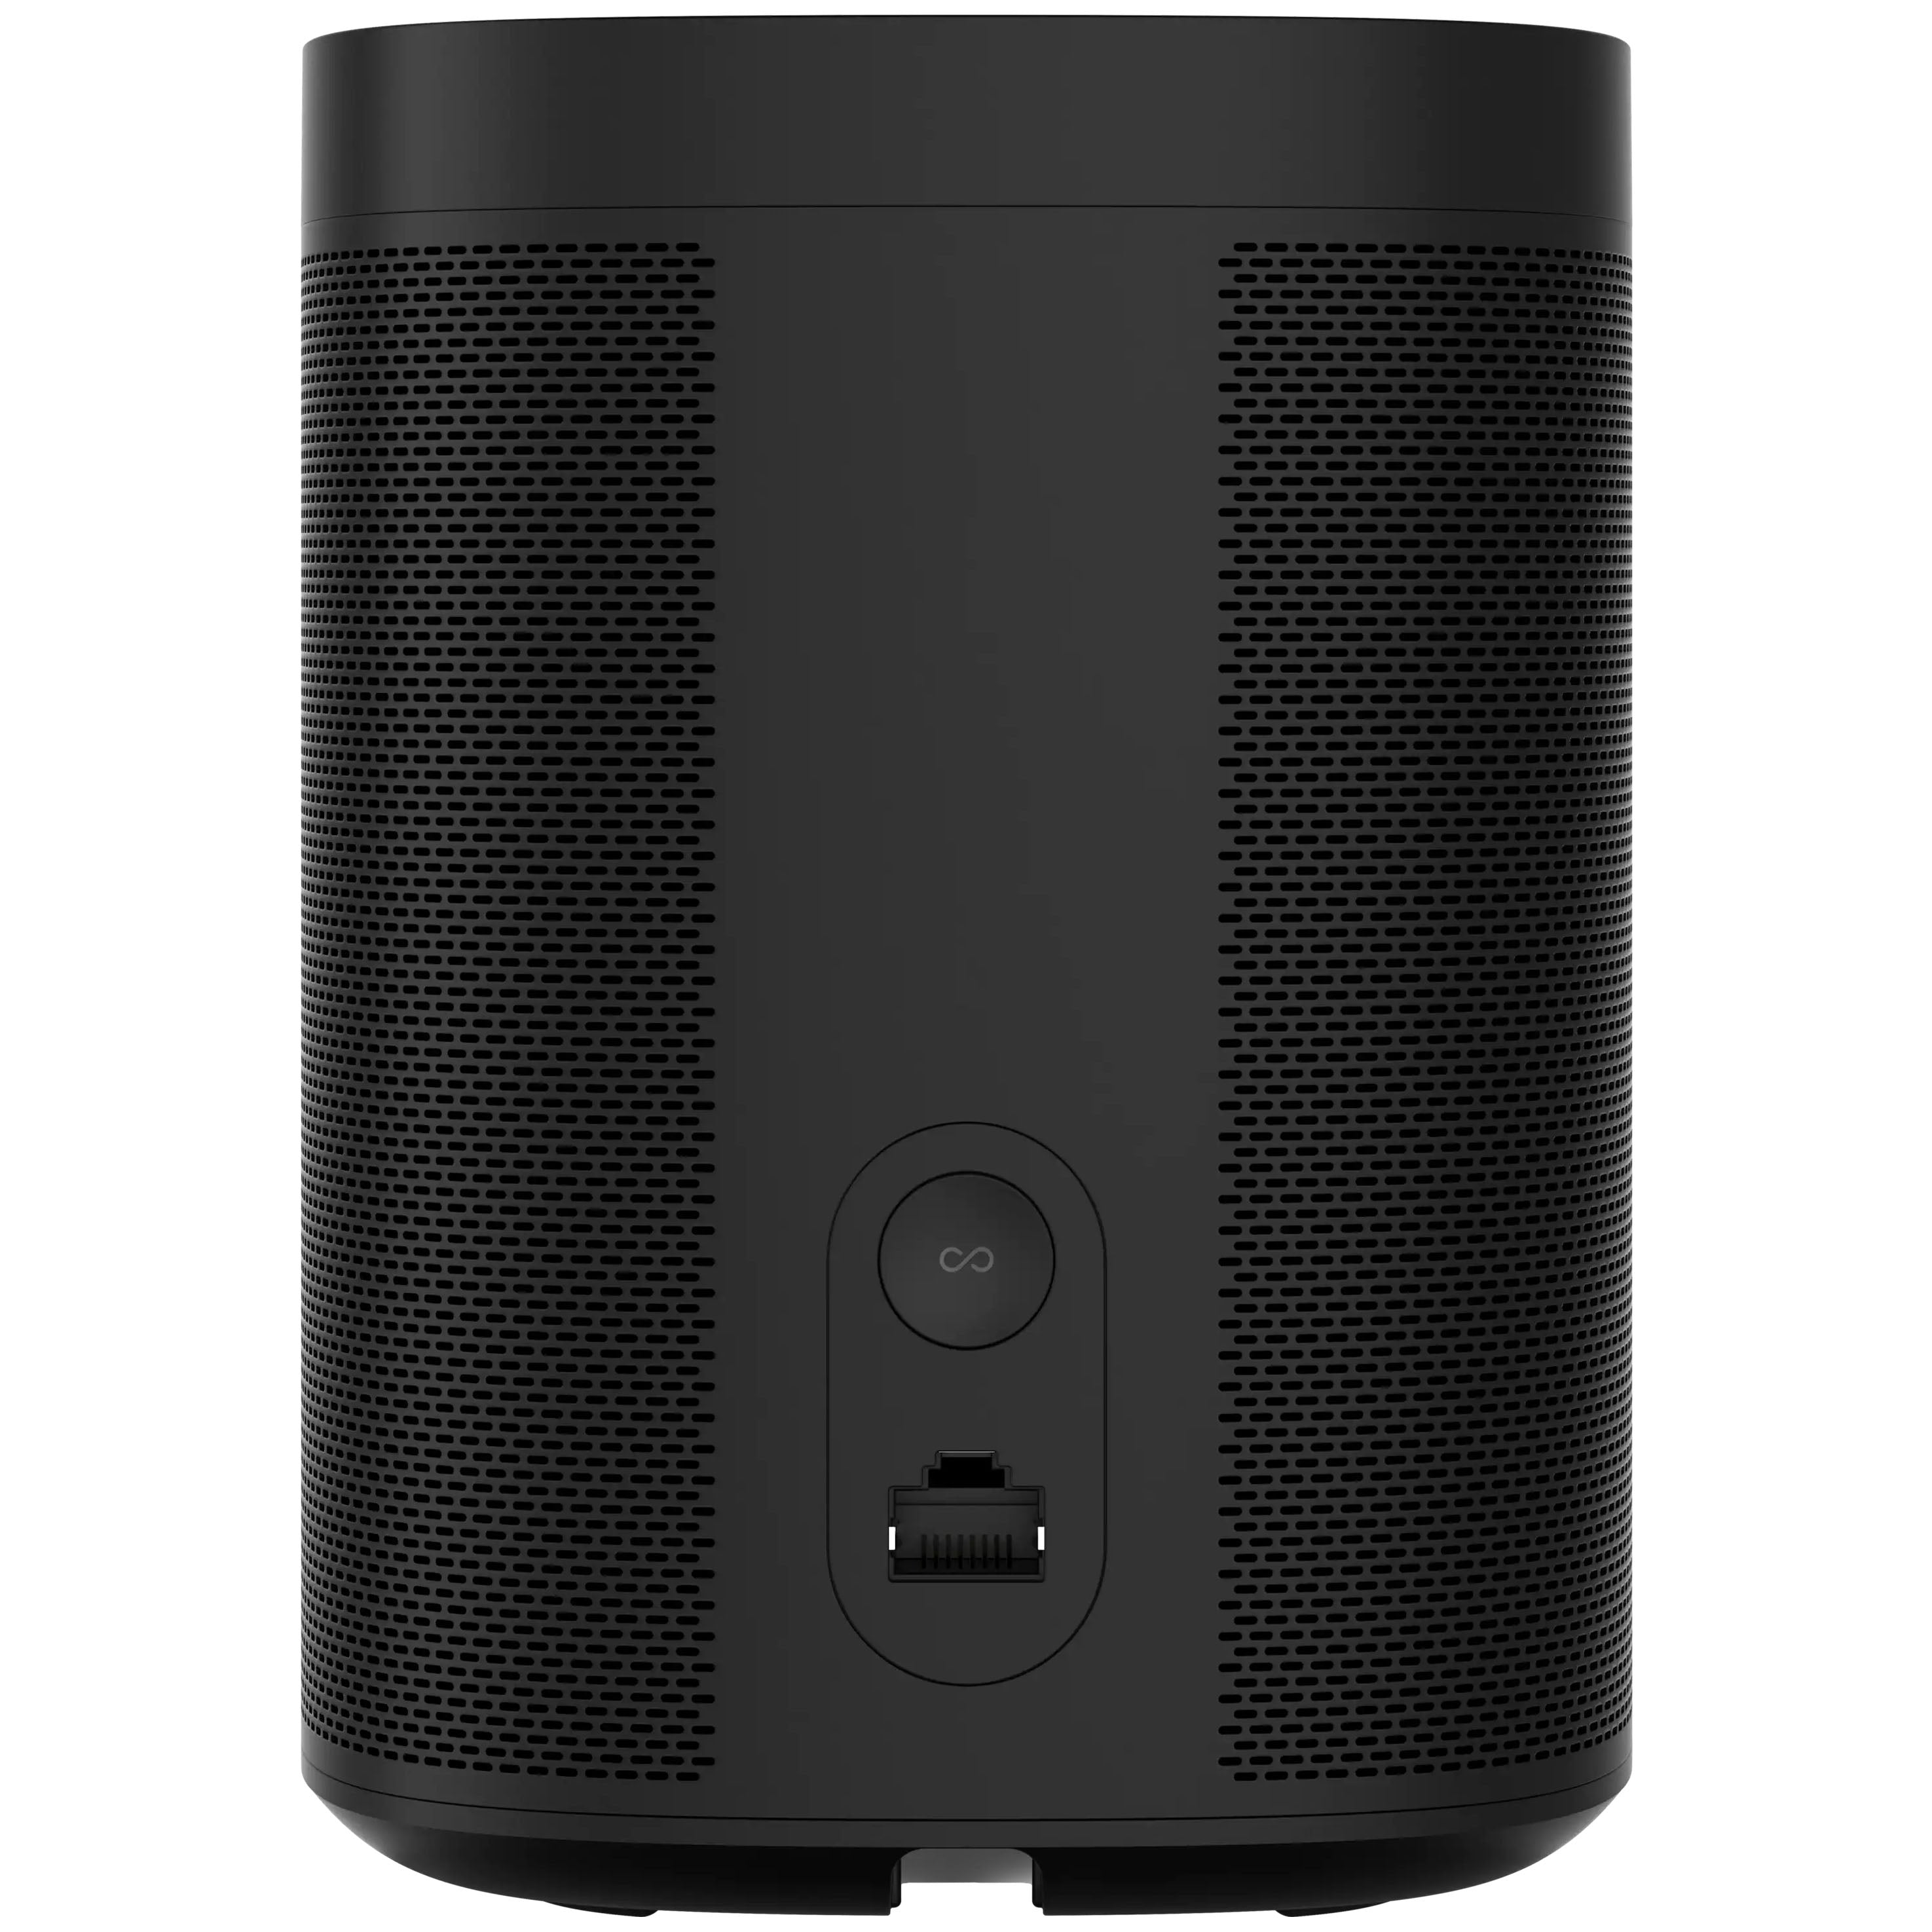 Sonos One SL - The Ultimate Wireless Bookshelf Speaker